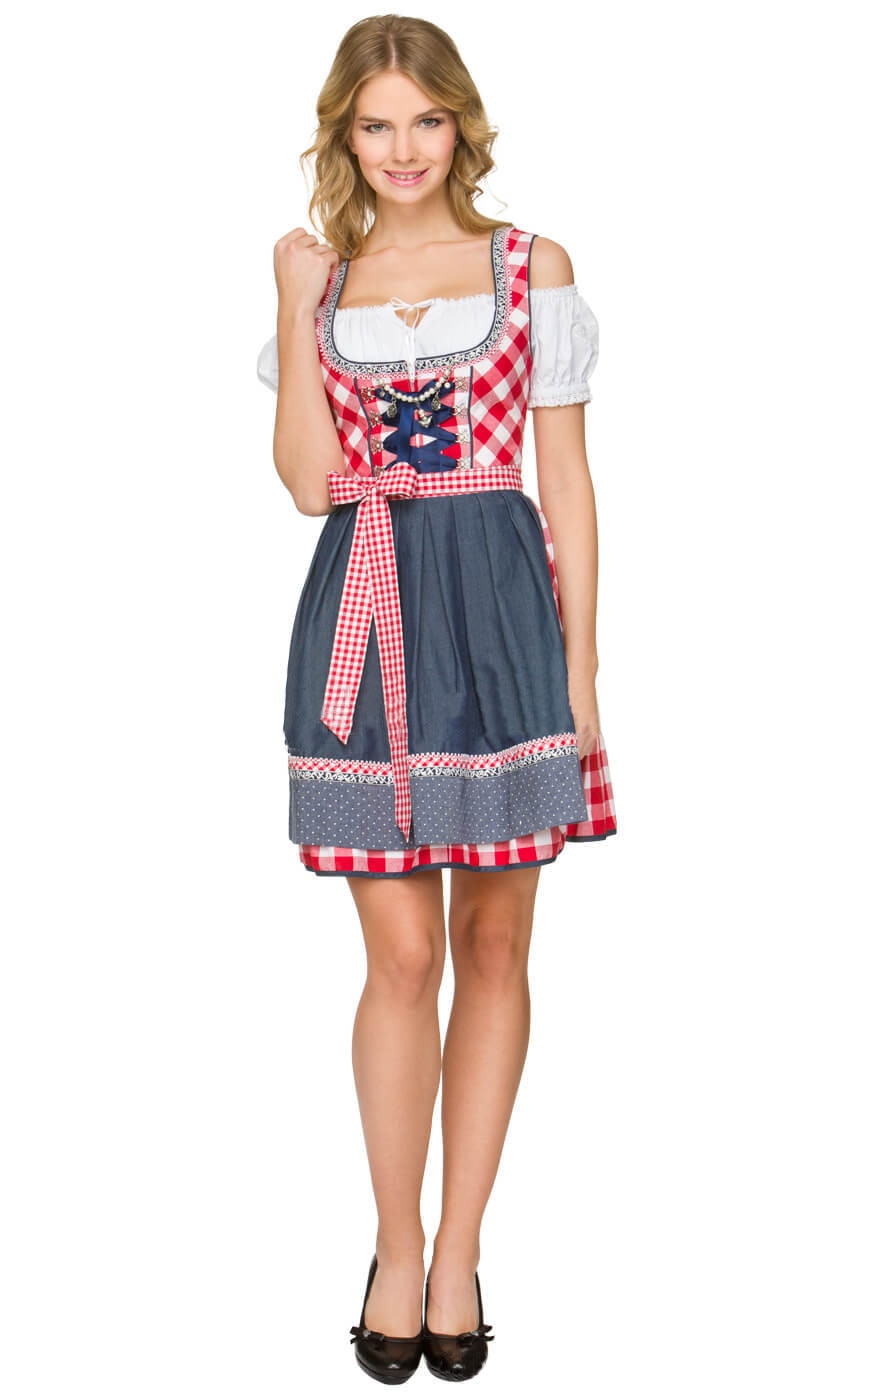 Women Oktoberfest Costume Octoberfest Bavarian Dirndl Maid Peasant Skirt Dress Party Female Oktoberfest Dress S-XXL